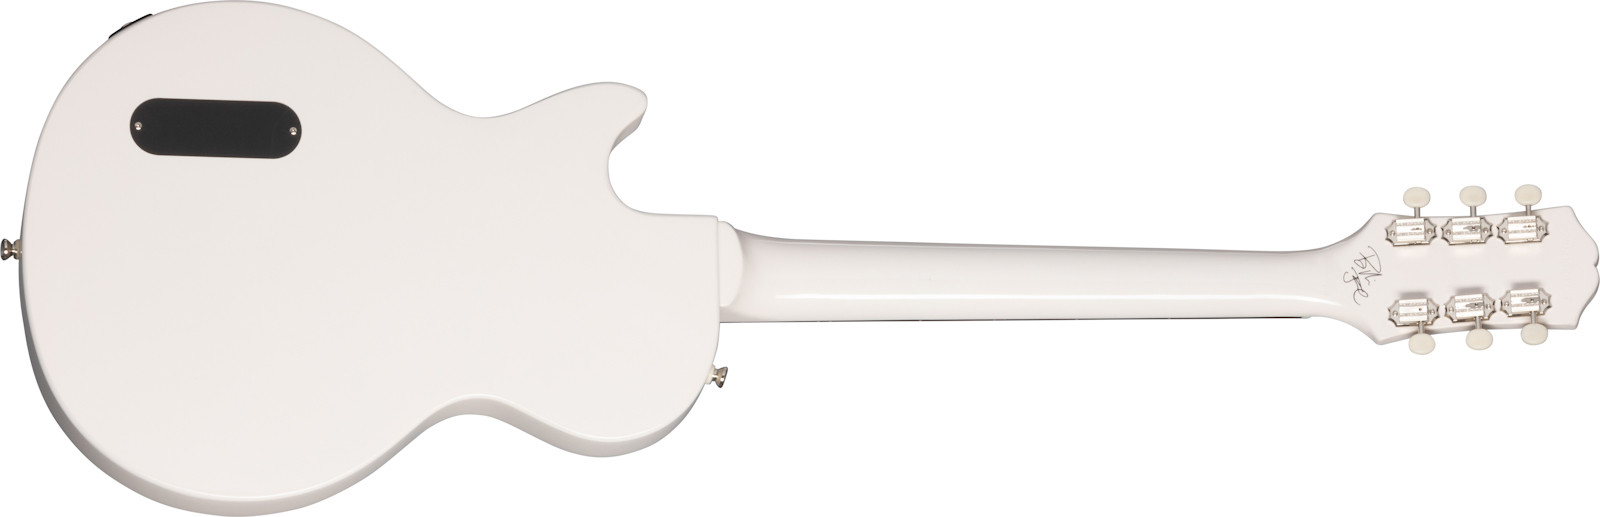 Epiphone Billie Joe Armstrong Les Paul Junior Signature S P90 Ht Lau - Classic White - Single-Cut-E-Gitarre - Variation 1